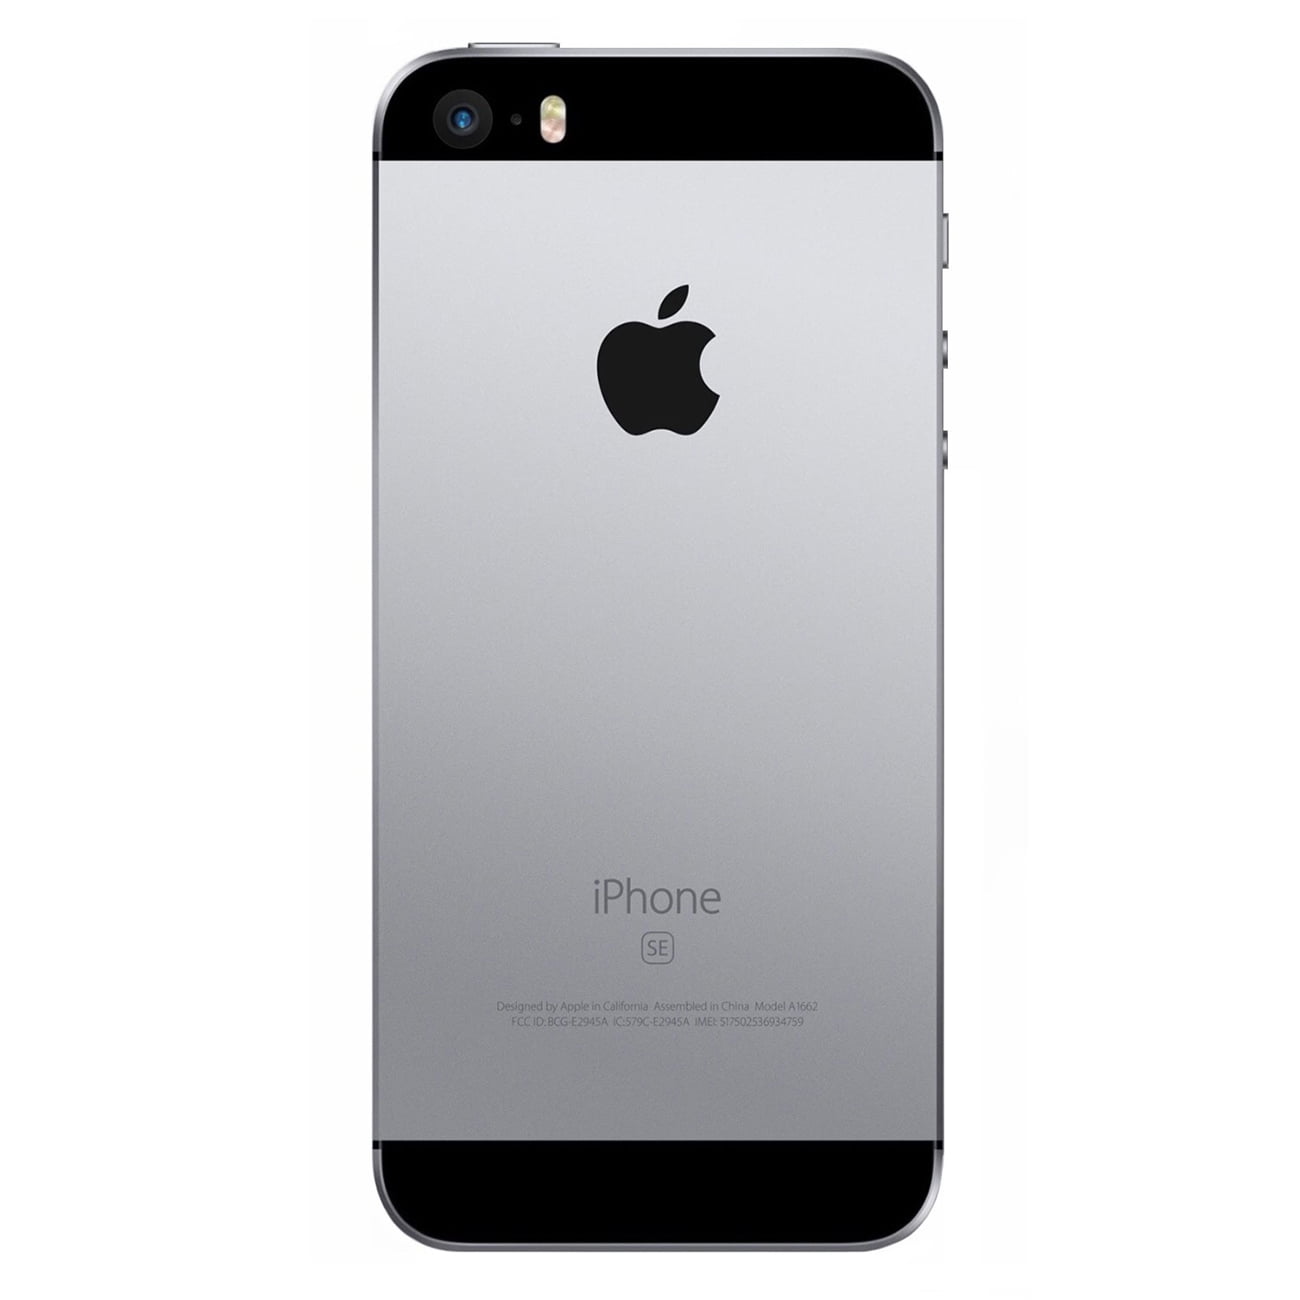 Apple iPhone SE 64GB IOS 9 Unlocked GSM Phone - Silver - Walmart.com